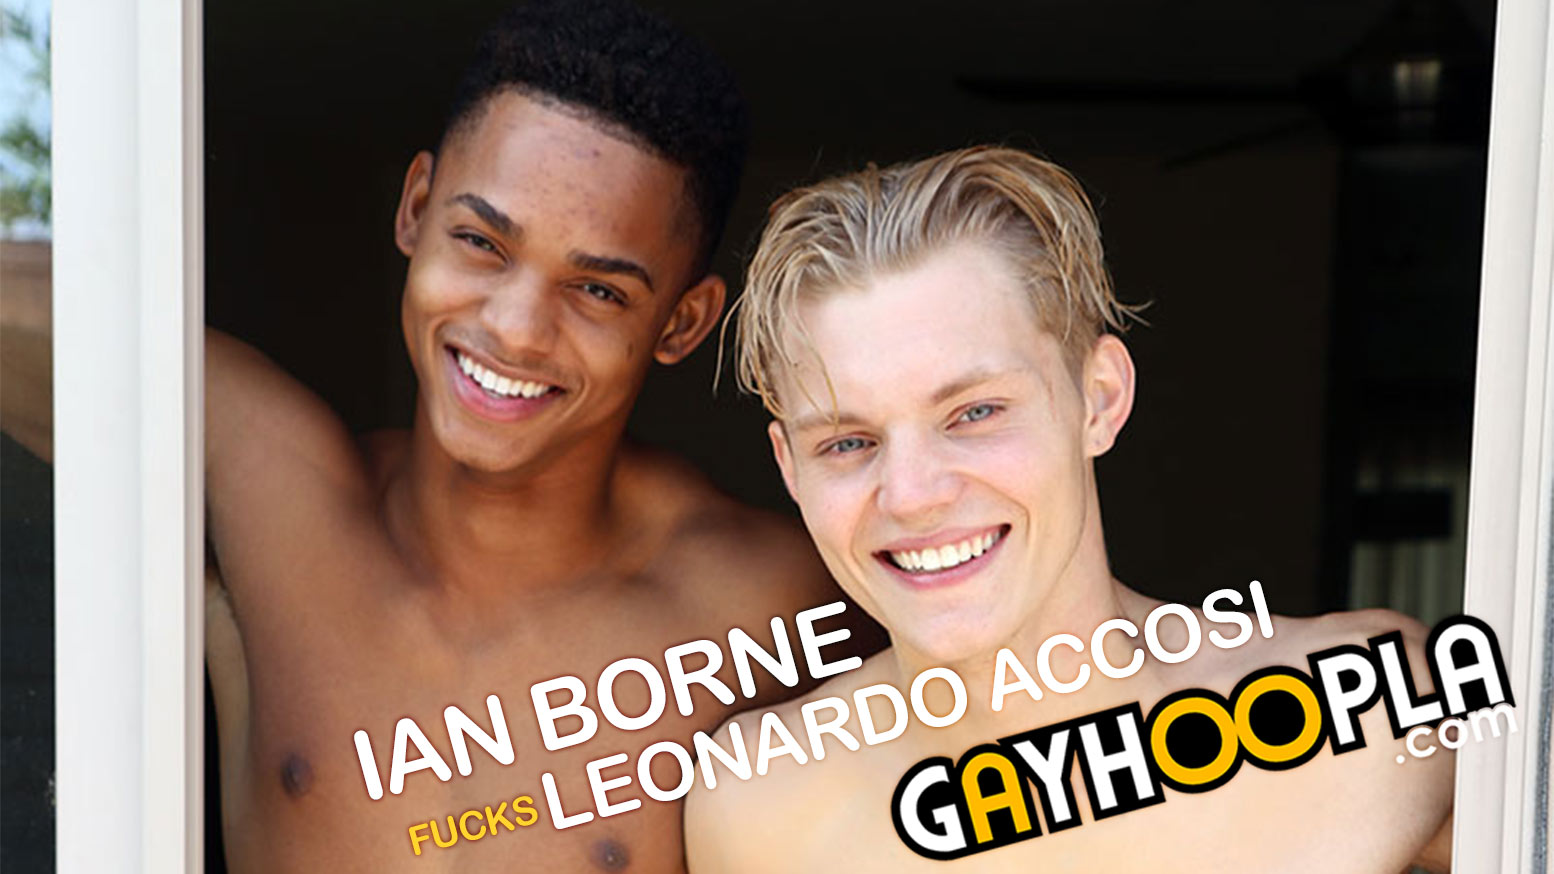 GayHoopla: Ian Borne Fucks Leonardo Accosi.